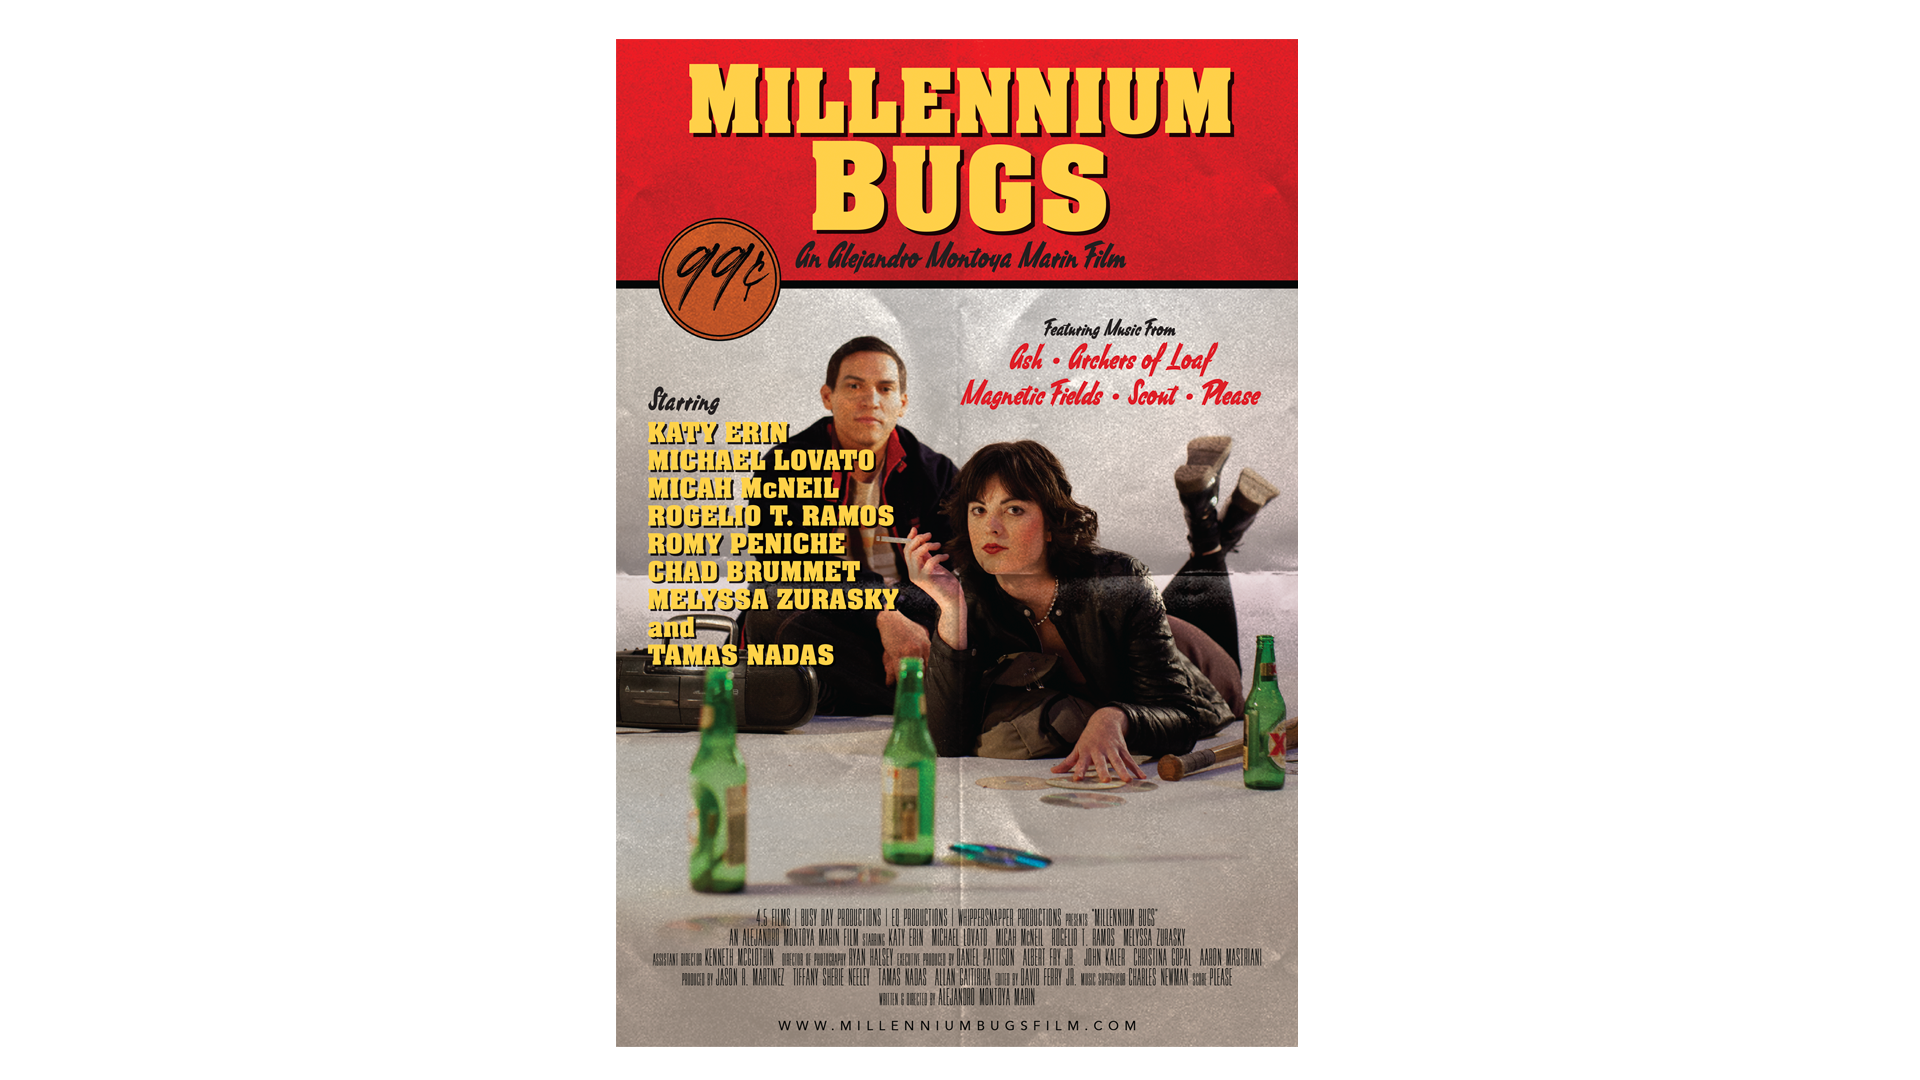 Millennium Bugs - PULP FICTION Variant one-sheet.png